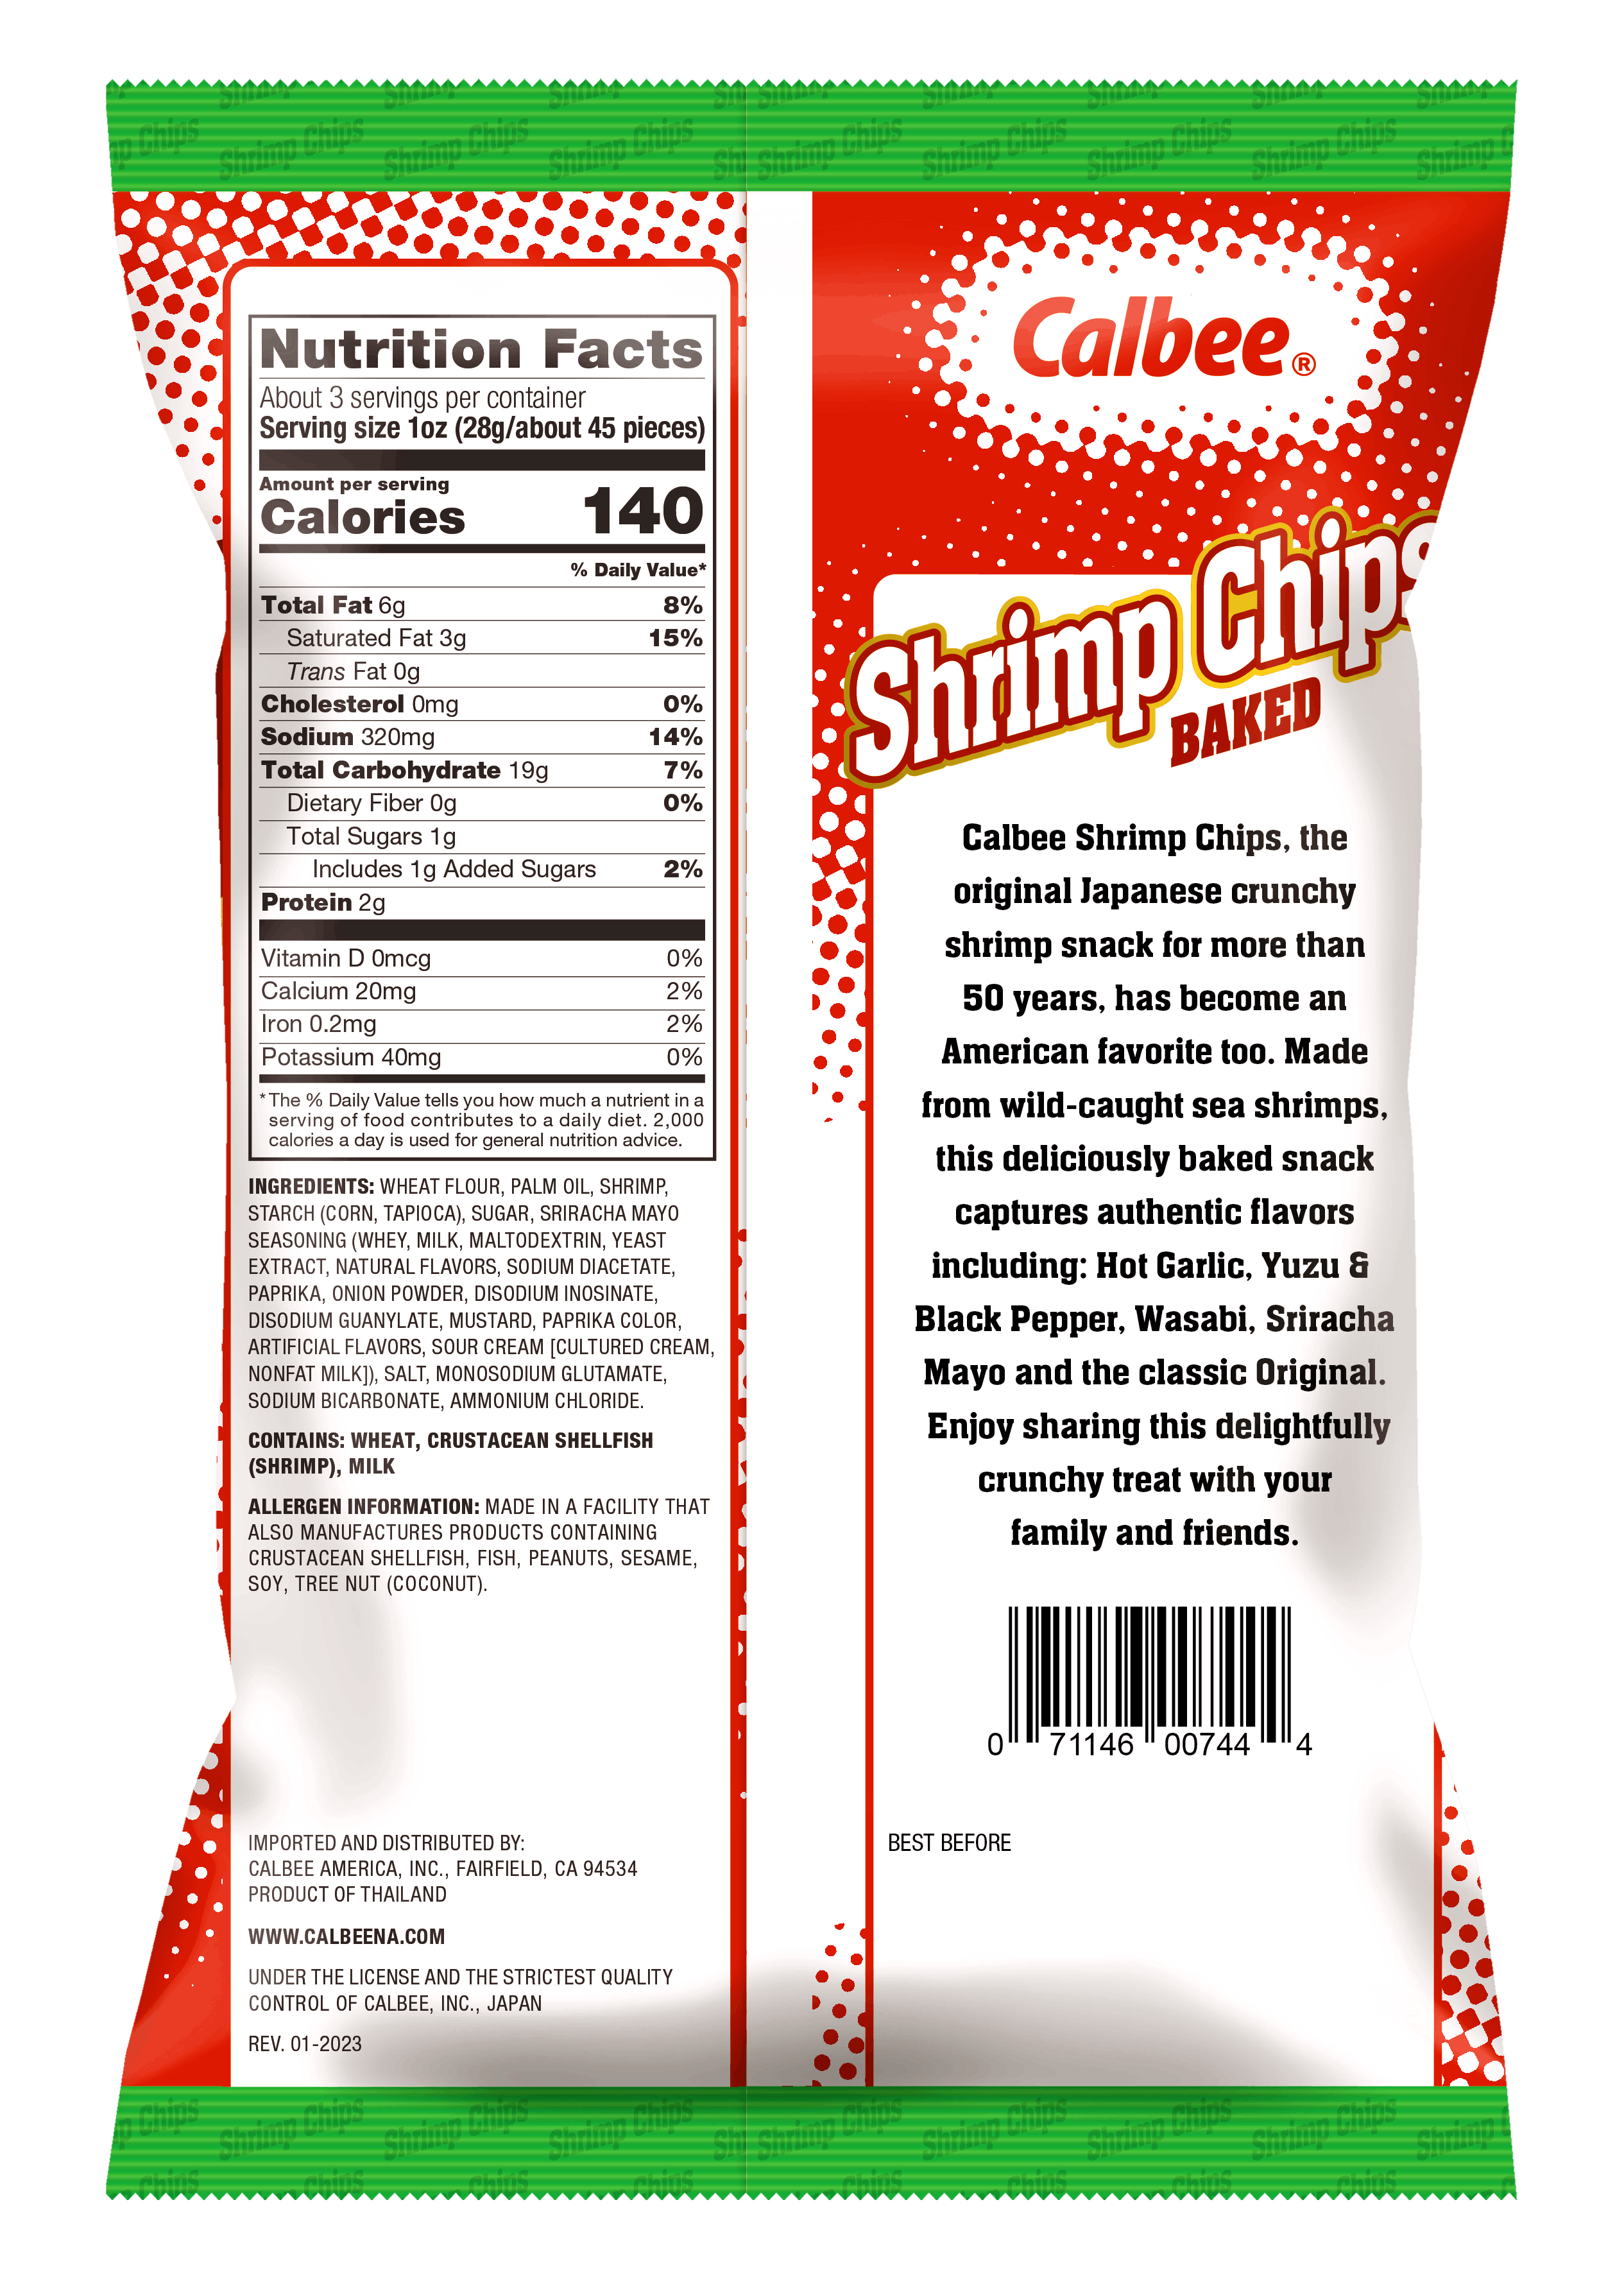 Shrimp Chips Sriracha Mayo - Back of Bag